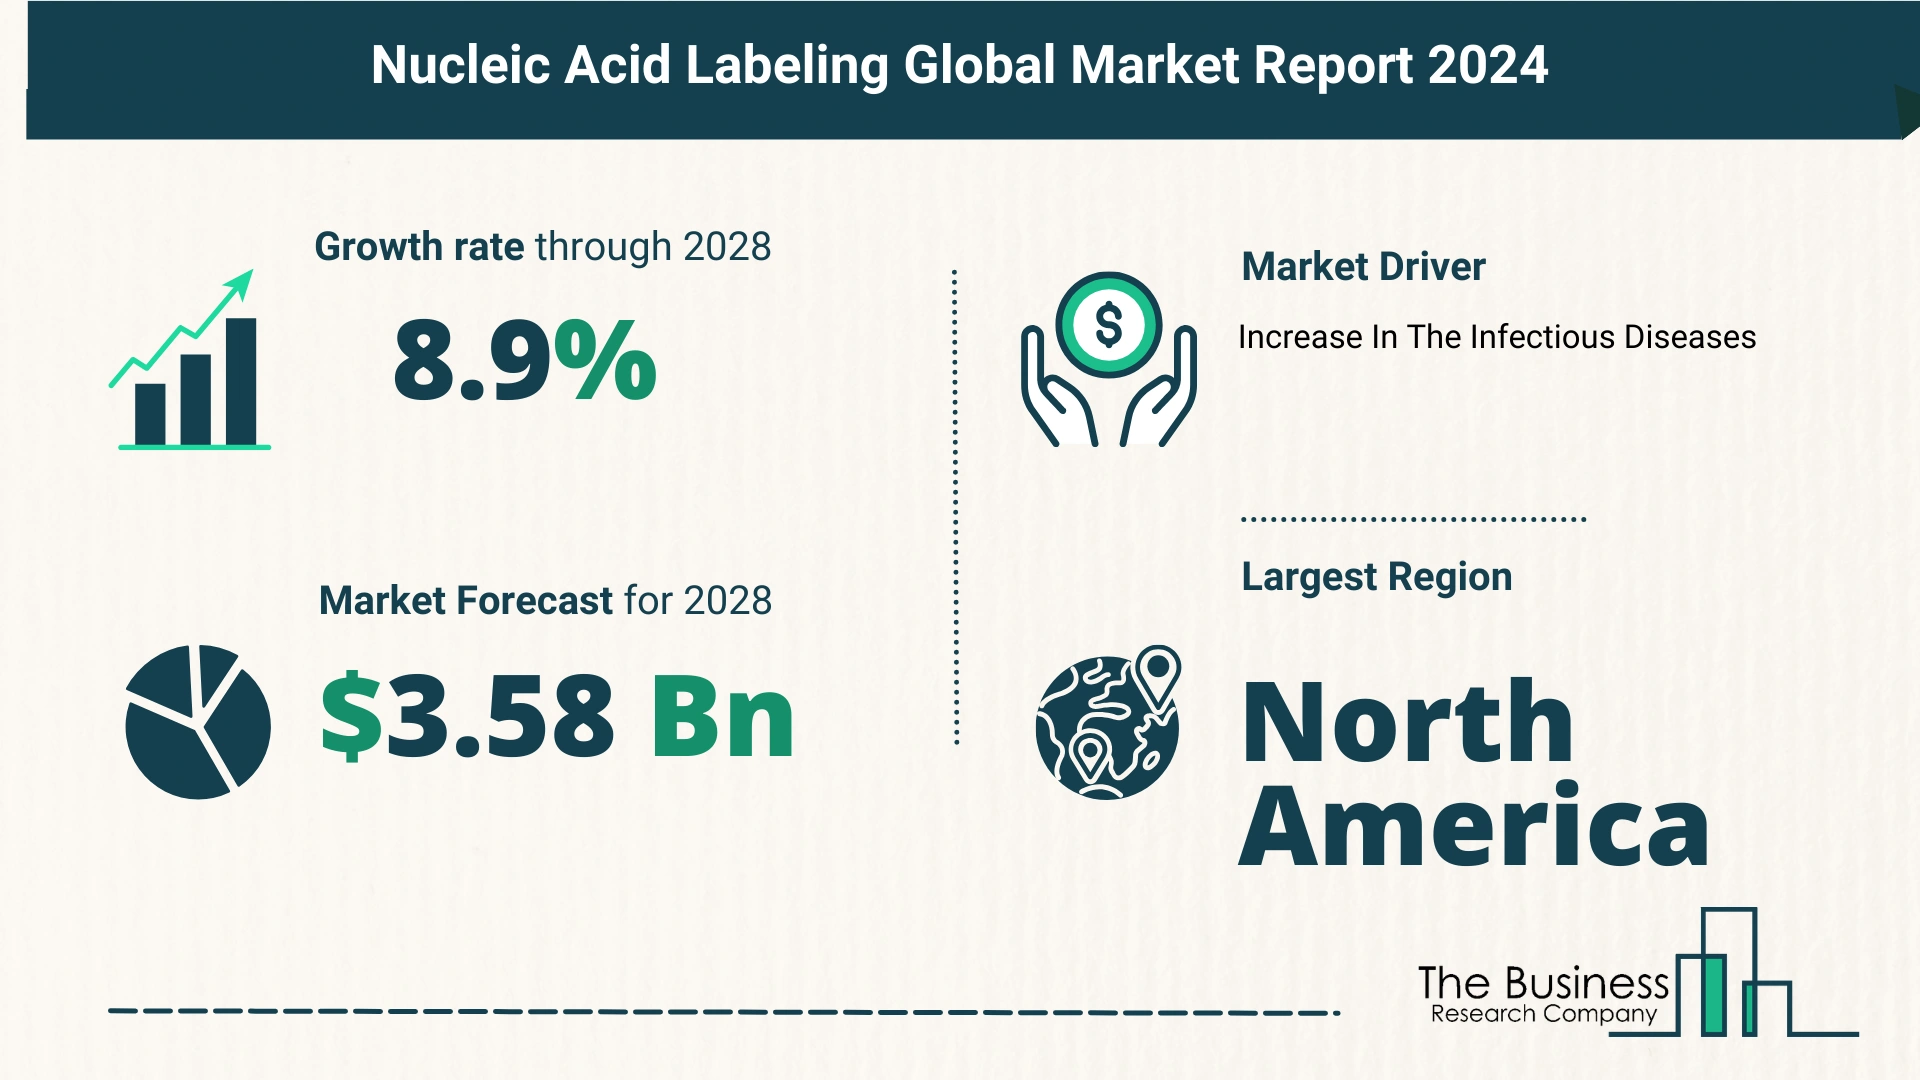 Global Nucleic Acid Labeling Market Report